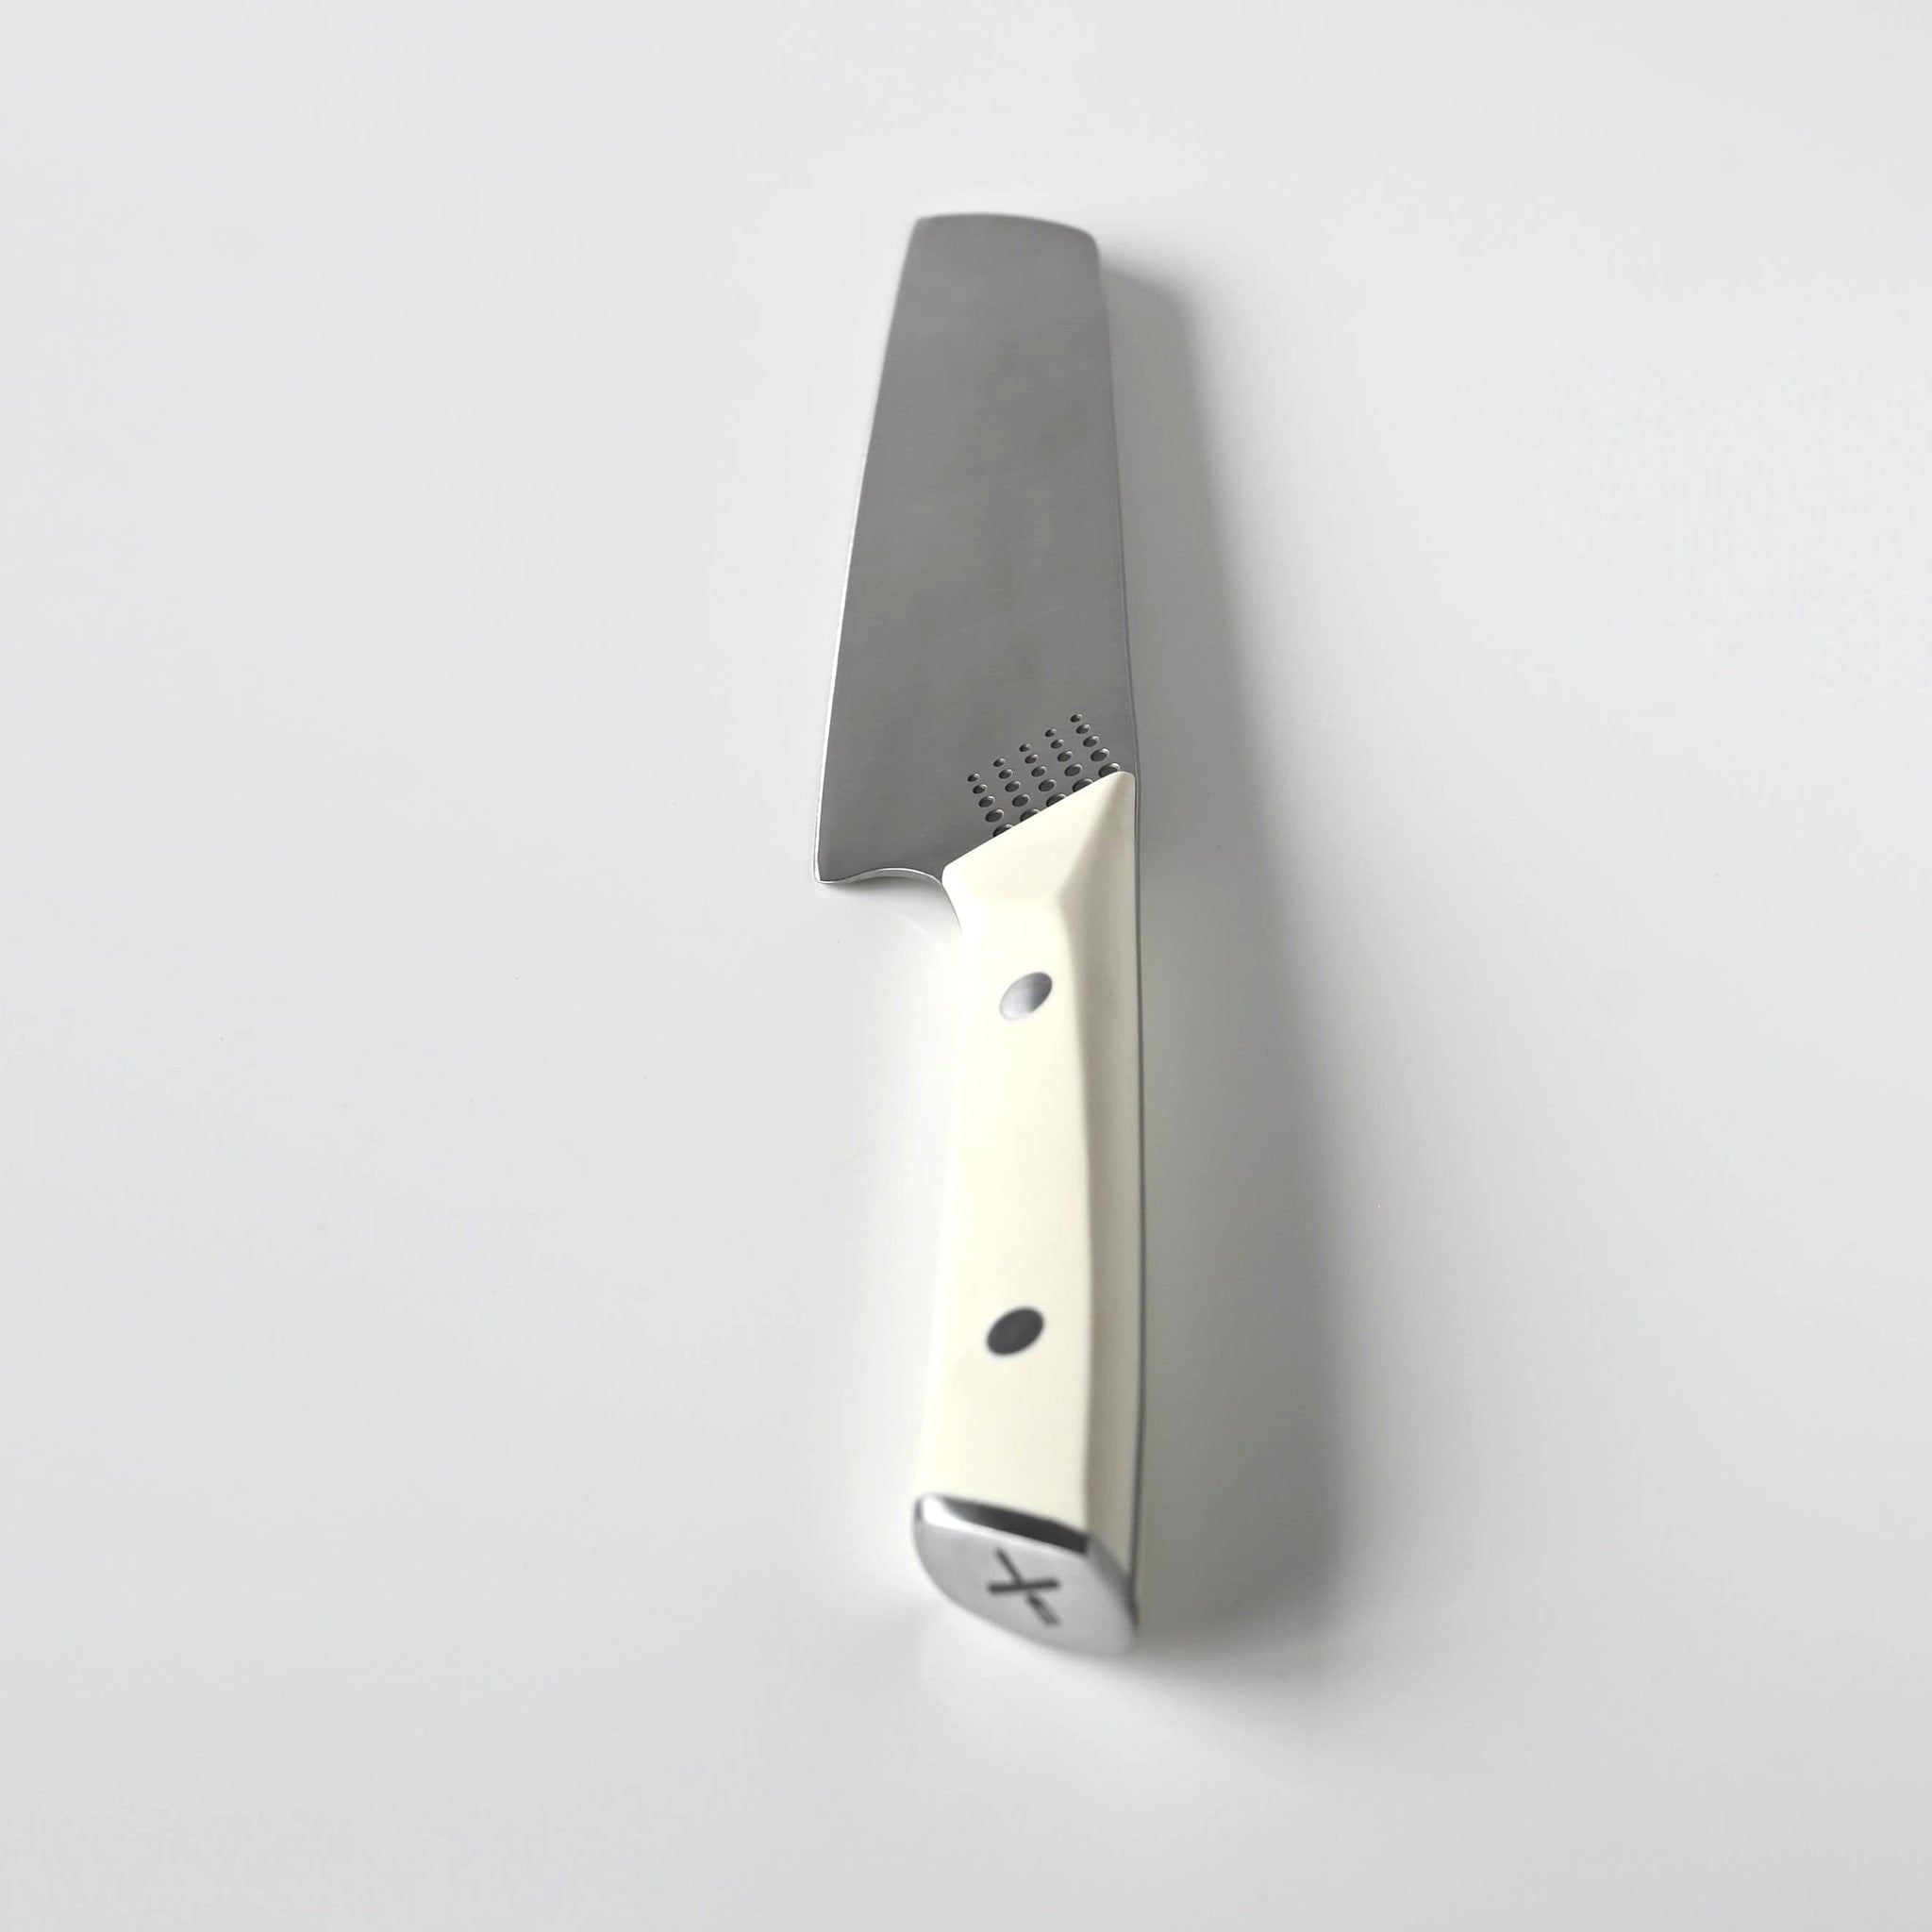 TheMix Shop Utensils Utility Paring Knife